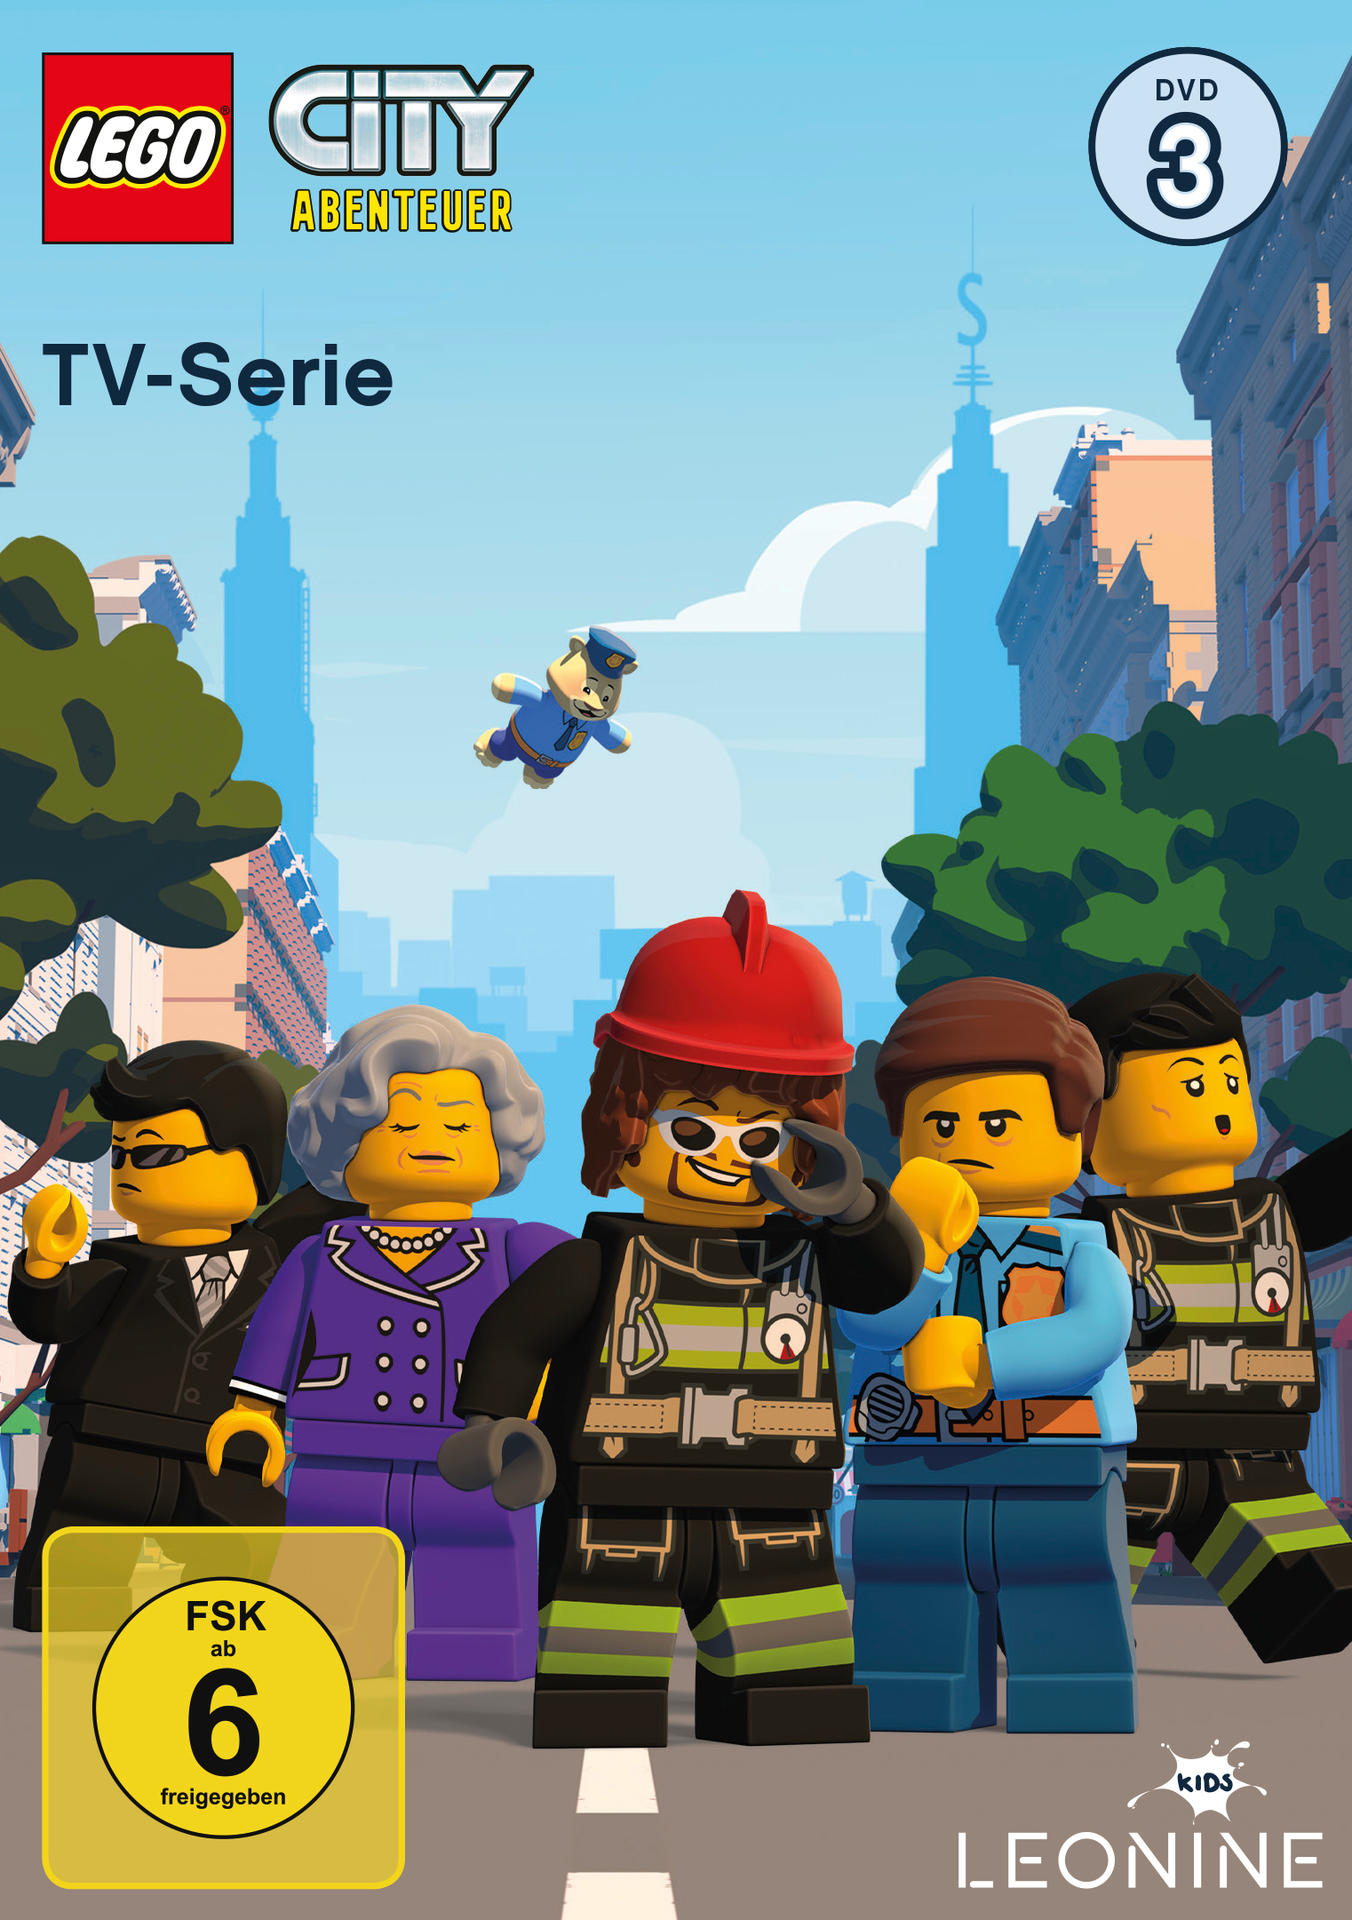 003 - LEGO CITY-TV-SERIE DVD